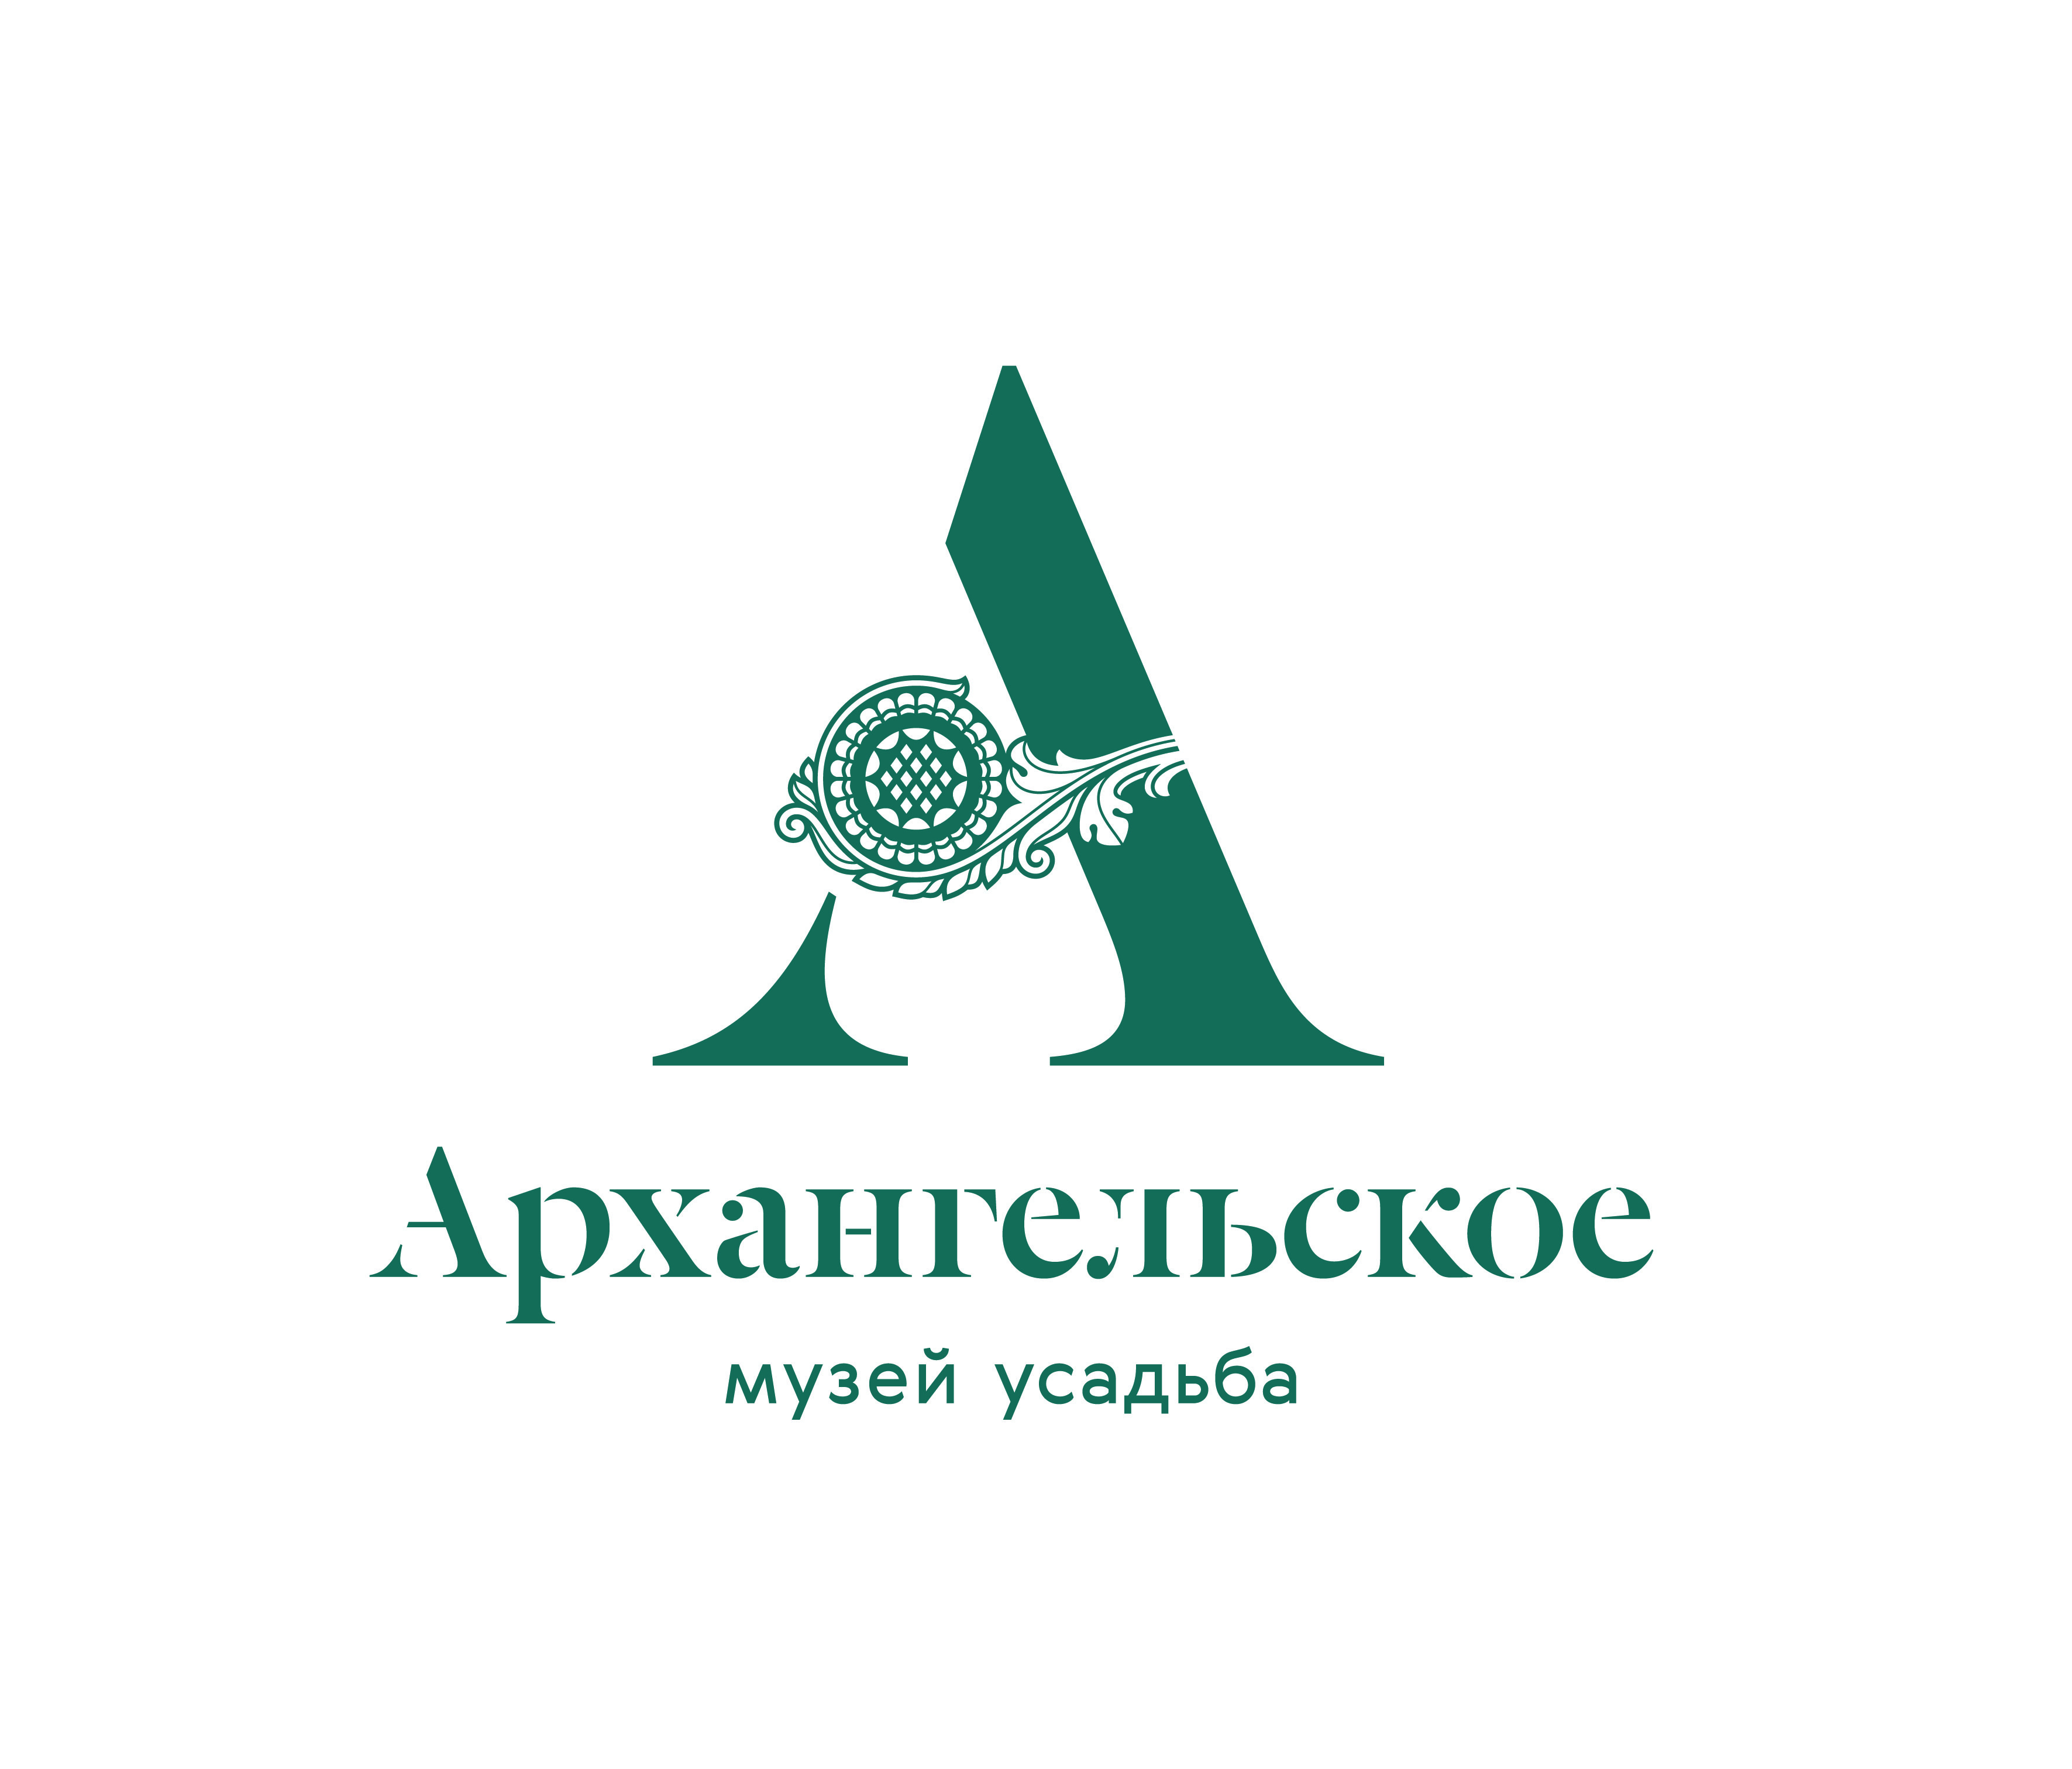 Z arh logo main rus 01